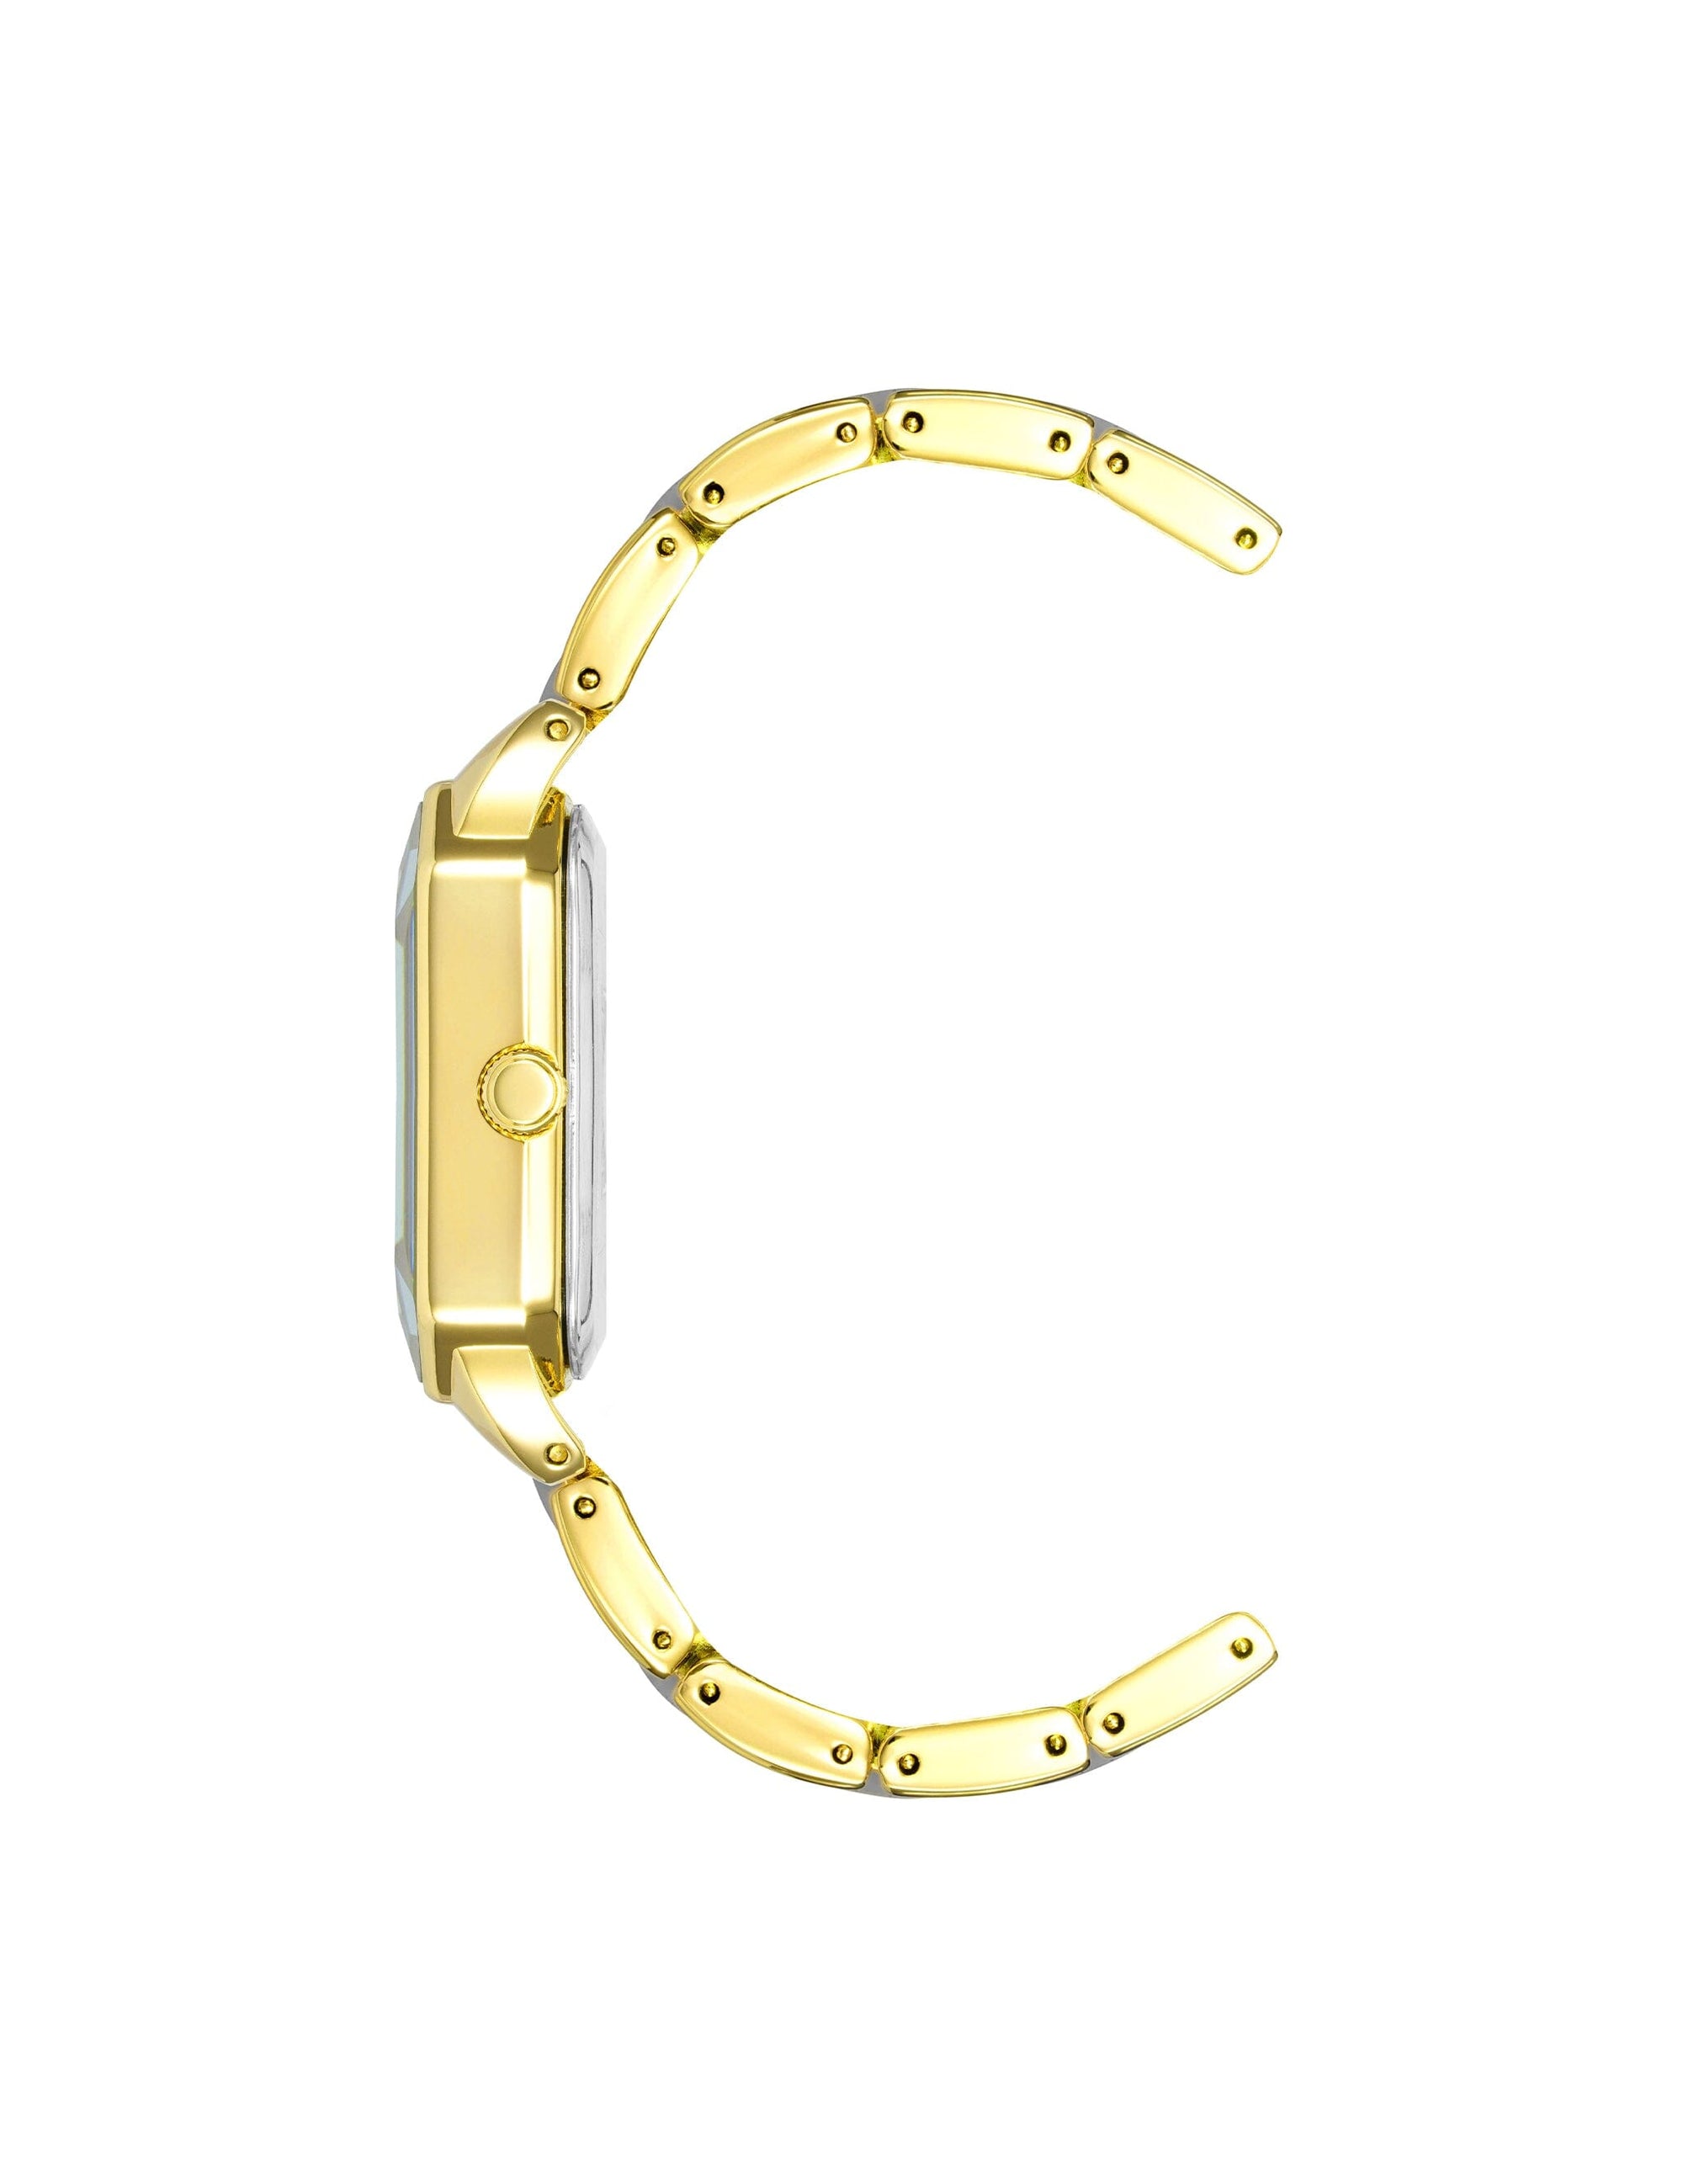 Anne Klein Grey/ Gold-Tone Square Case Resin Link Bracelet Watch